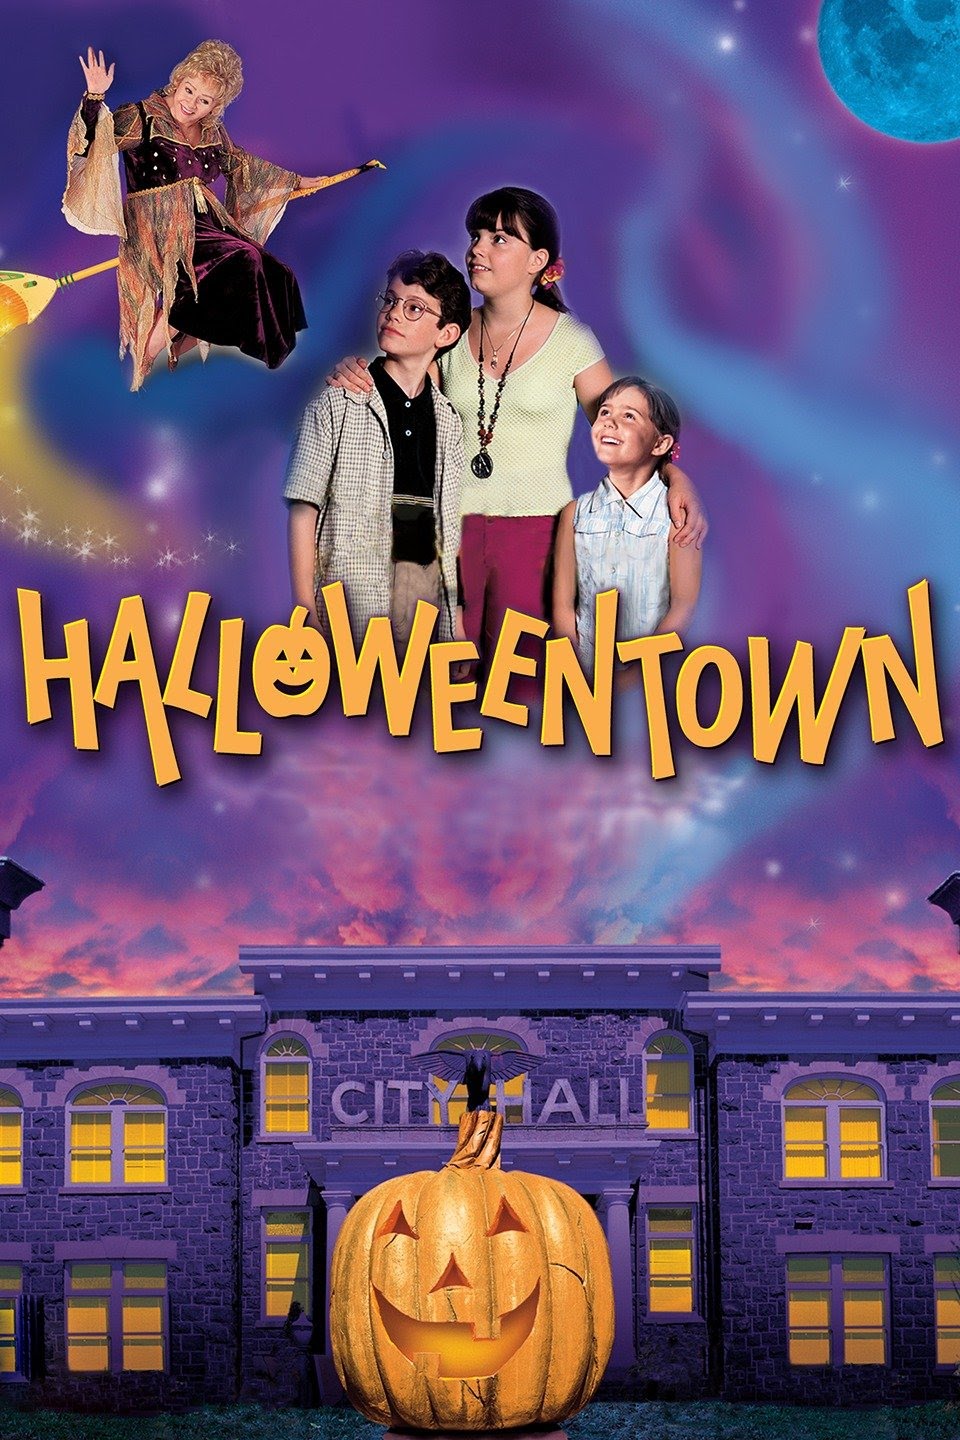 Halloweentown - Disney Halloween movies